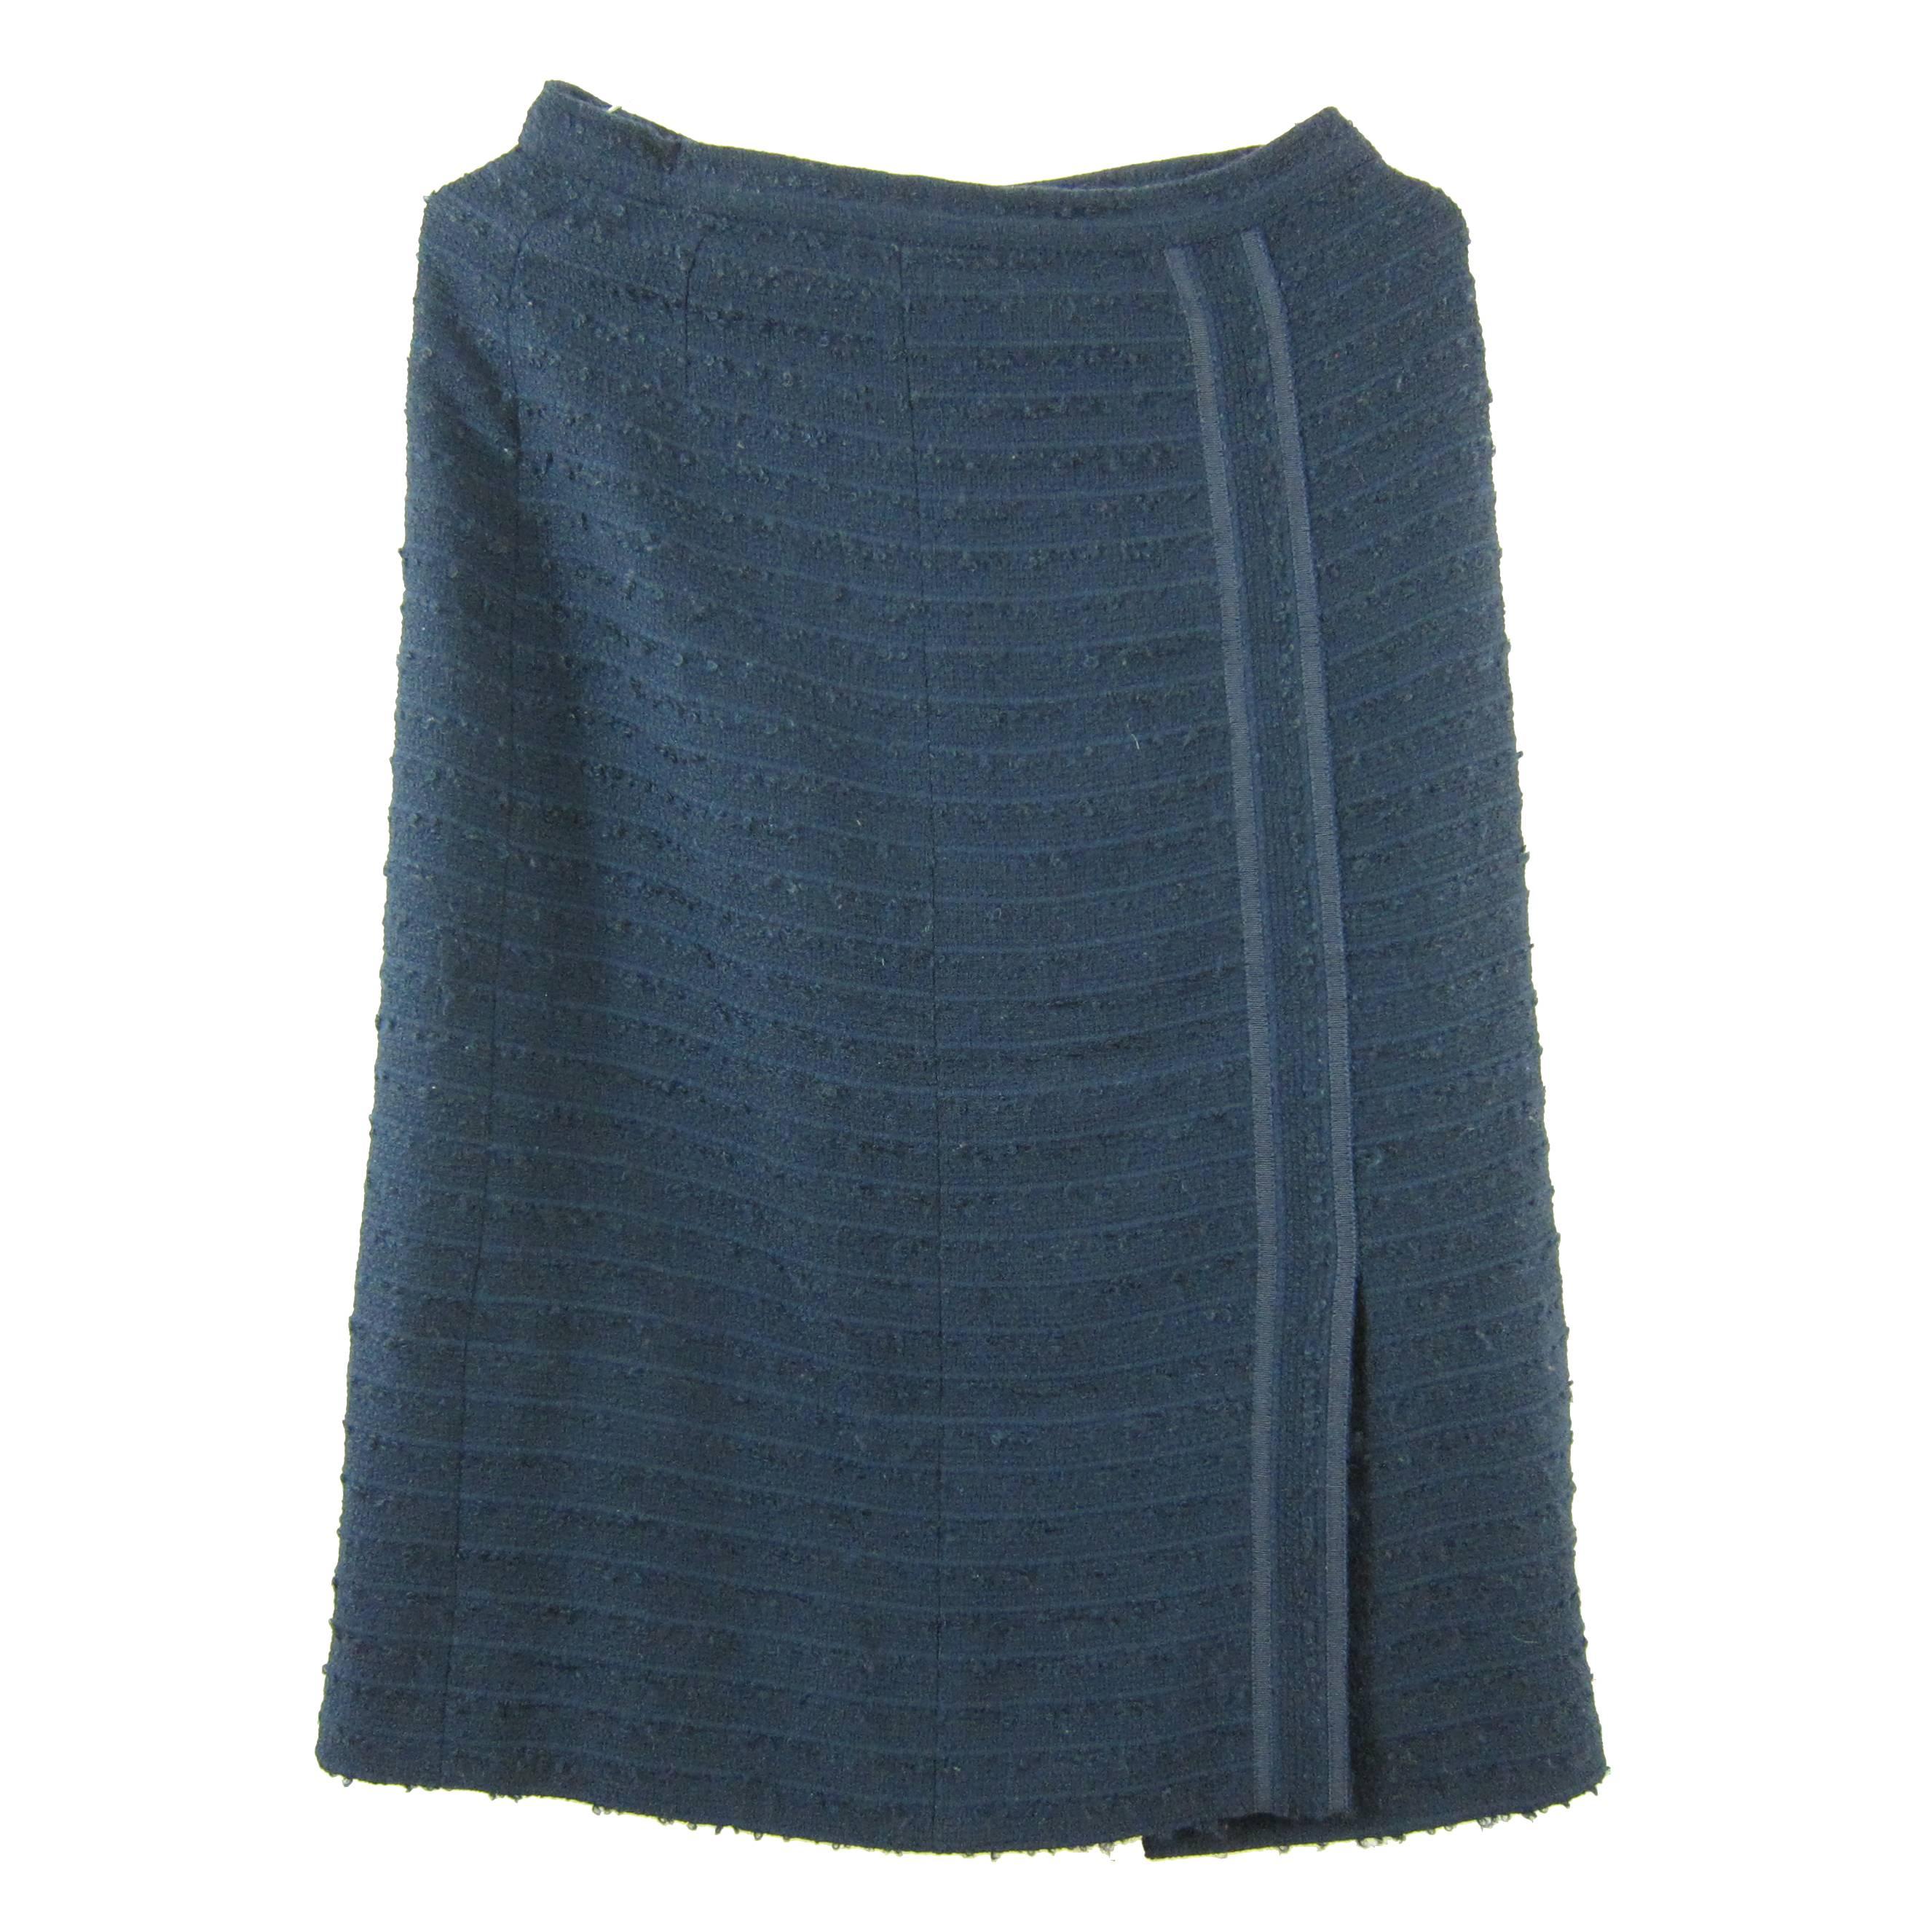 Chanel Vintage Blue Marine Wool Skirt. Size 38